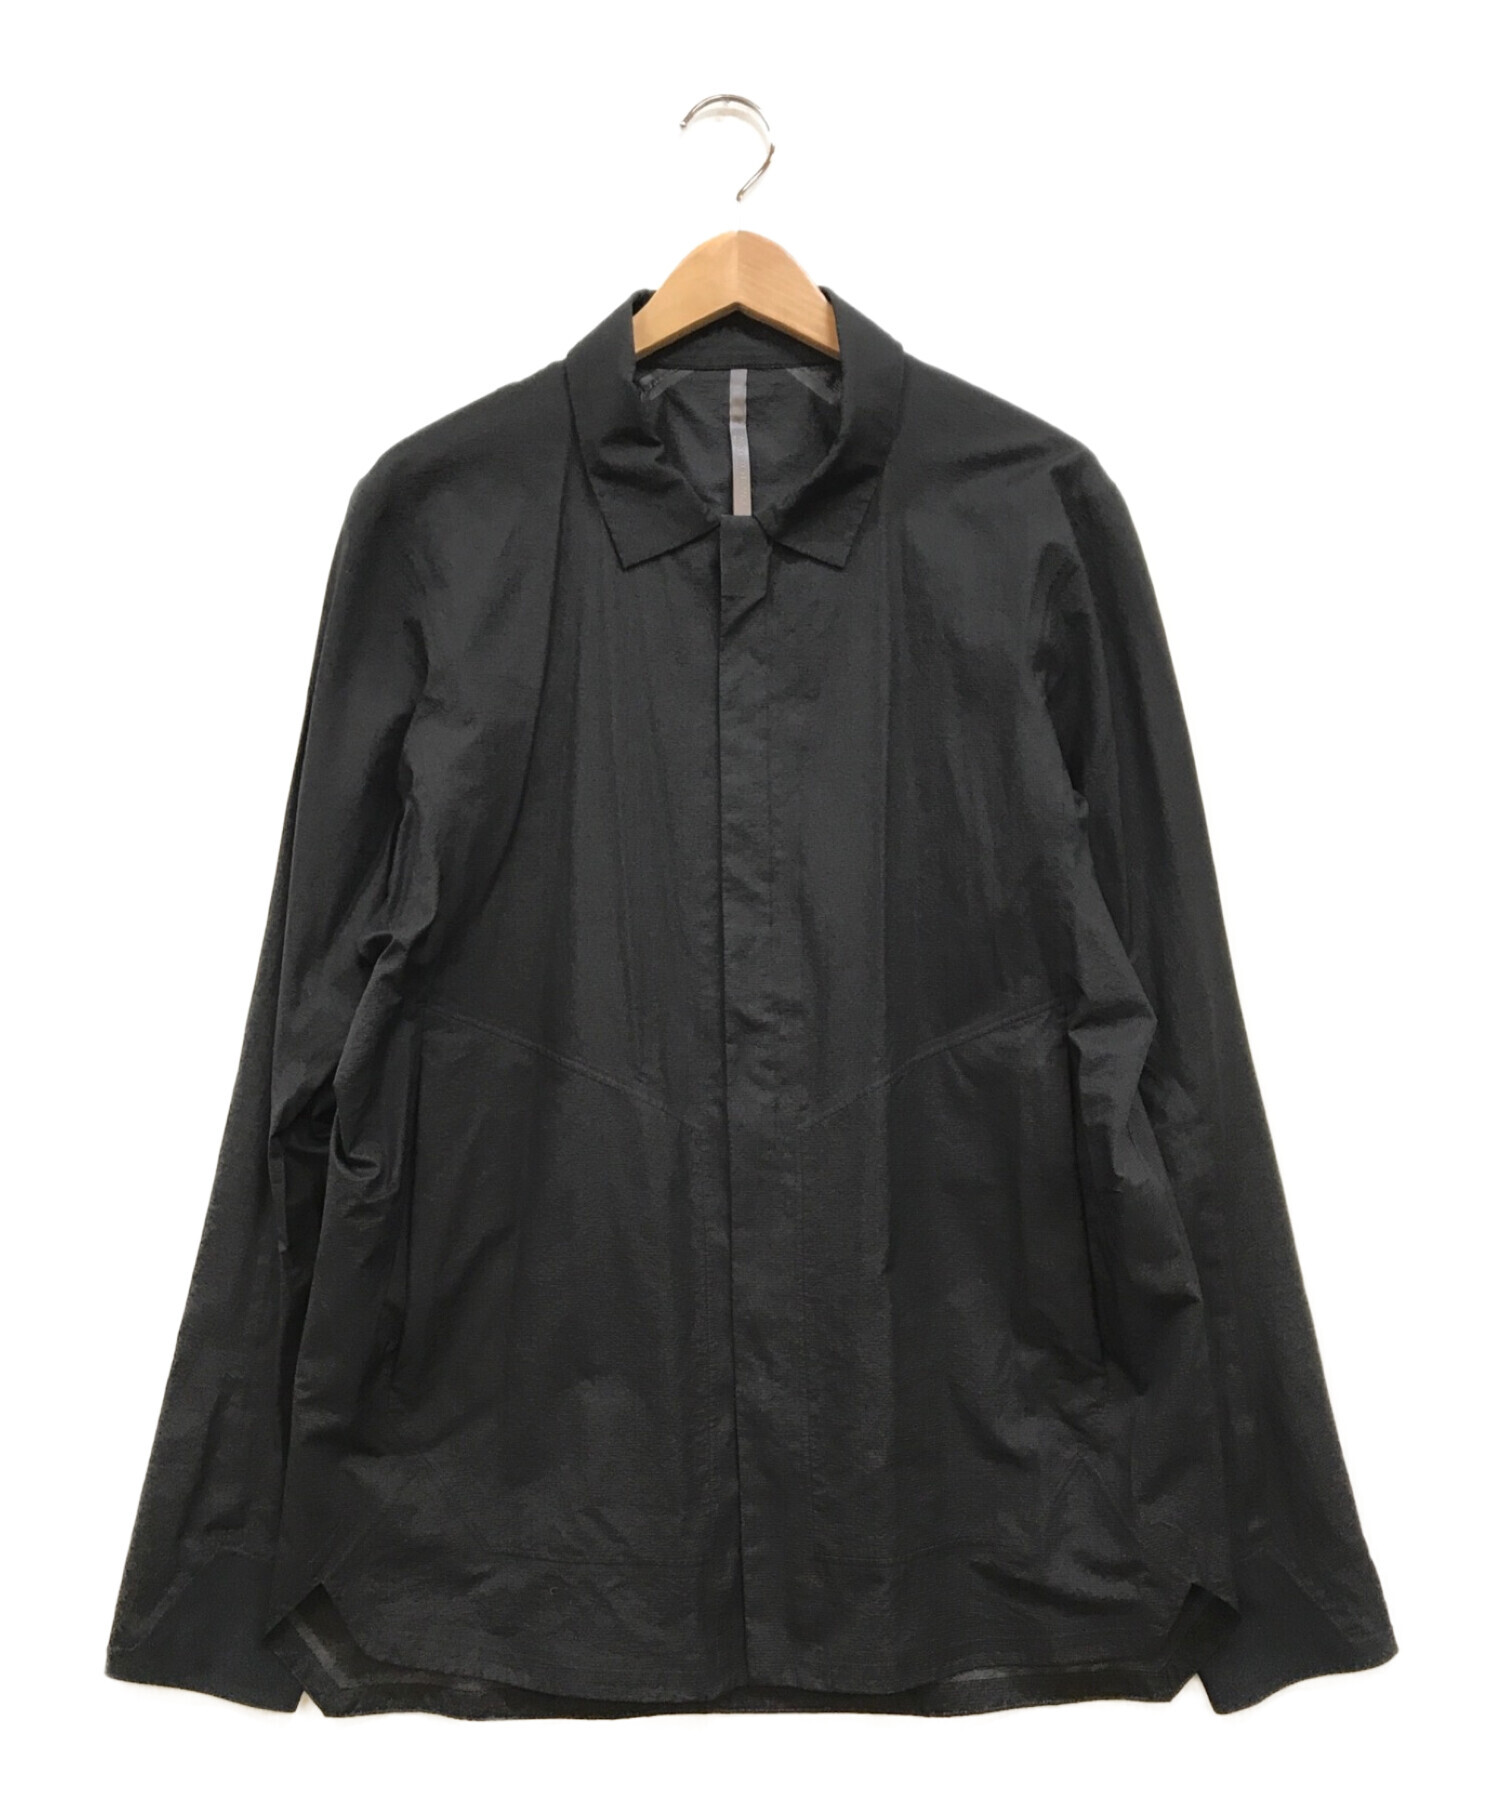 ARC'TERYX VEILANCE (アークテリクス ヴェイランス) Demlo SL Shirt Jacket ブラック サイズ:S